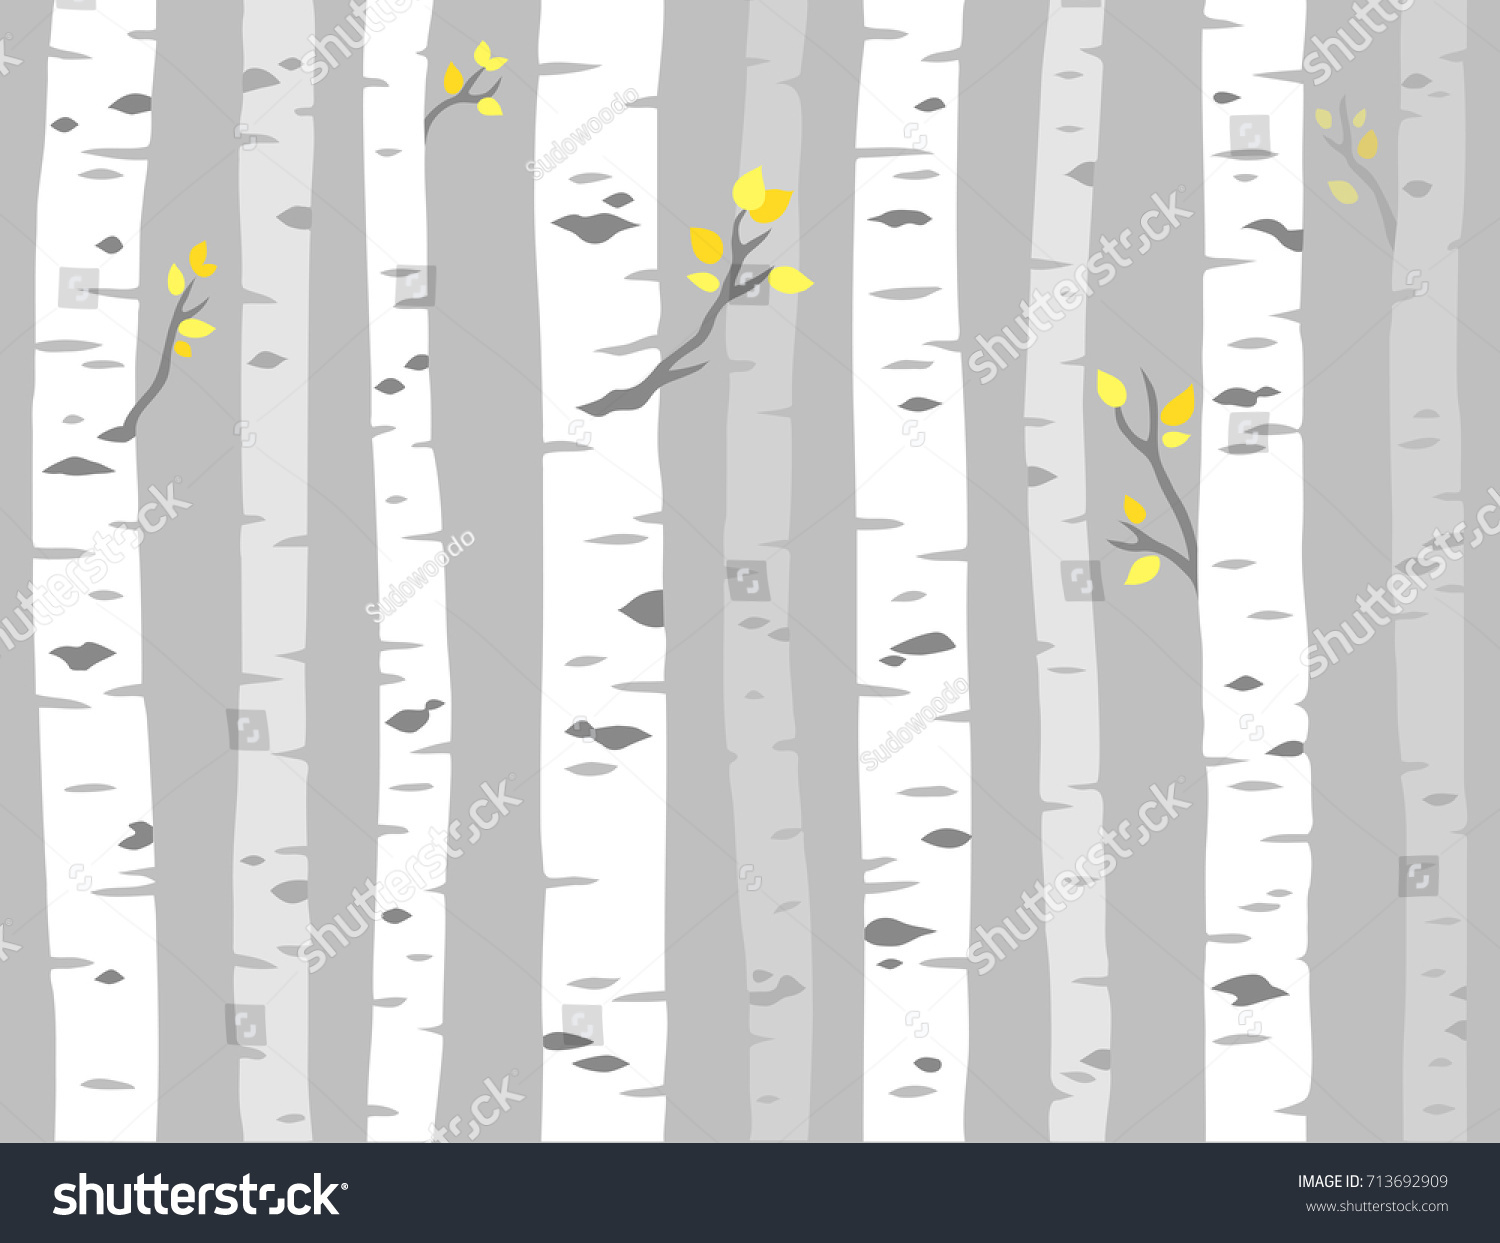 SVG of Aspen or birch grove seamless pattern. Tree trunks on gray background, simple vector illustration. svg